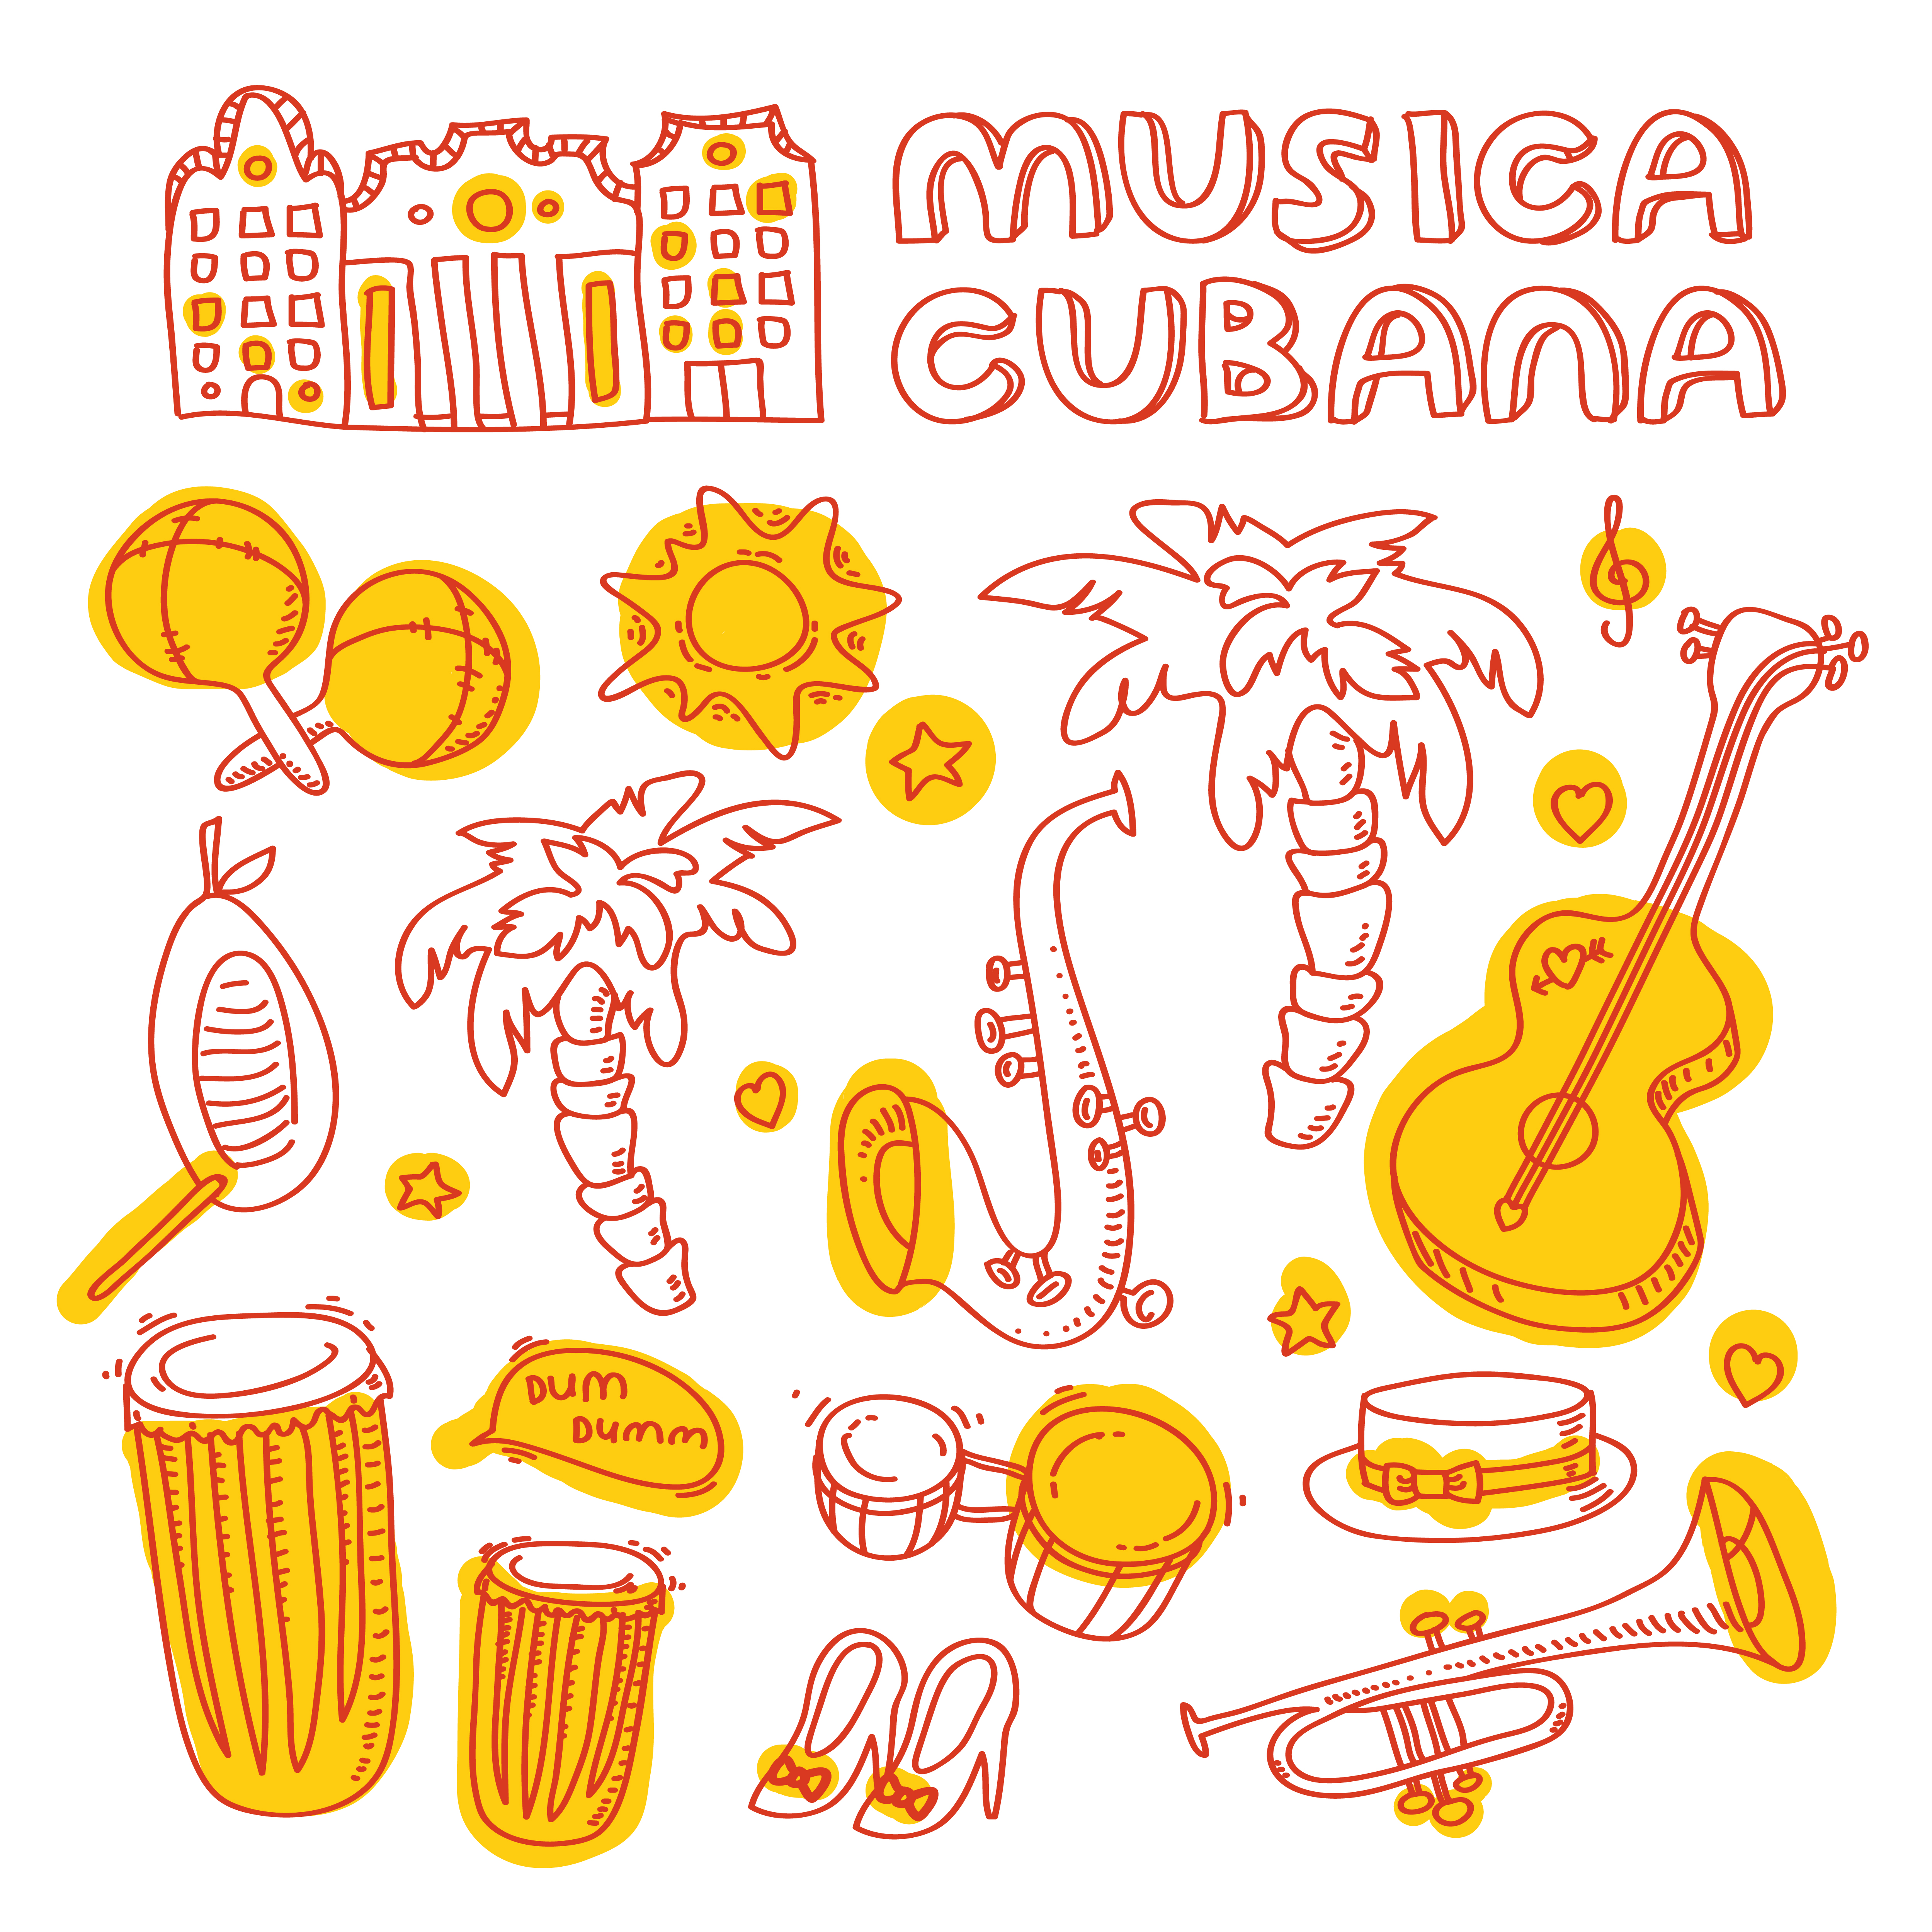 cuban music instrumentation clave